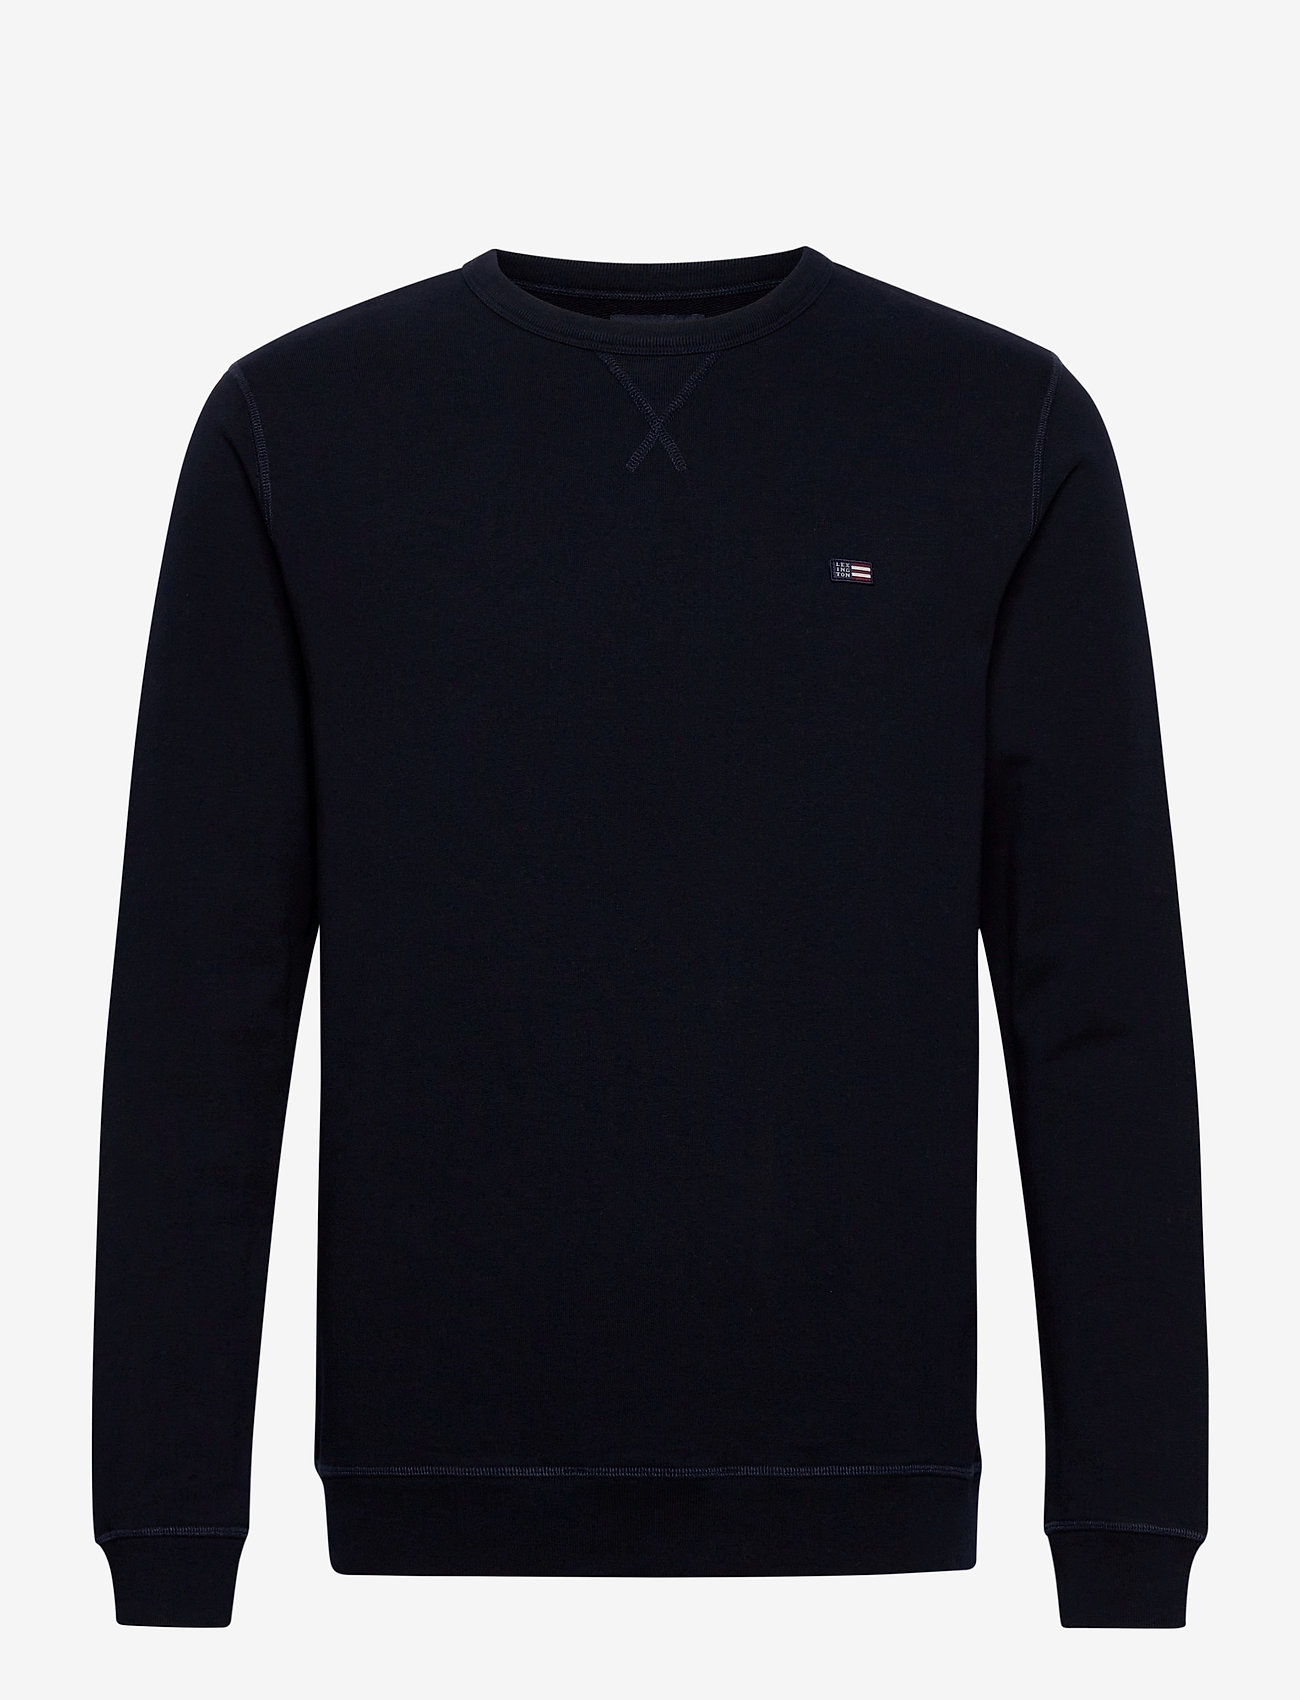 Lexington Clothing - Mateo Sweatshirt - sweatshirts - dark blue - 0